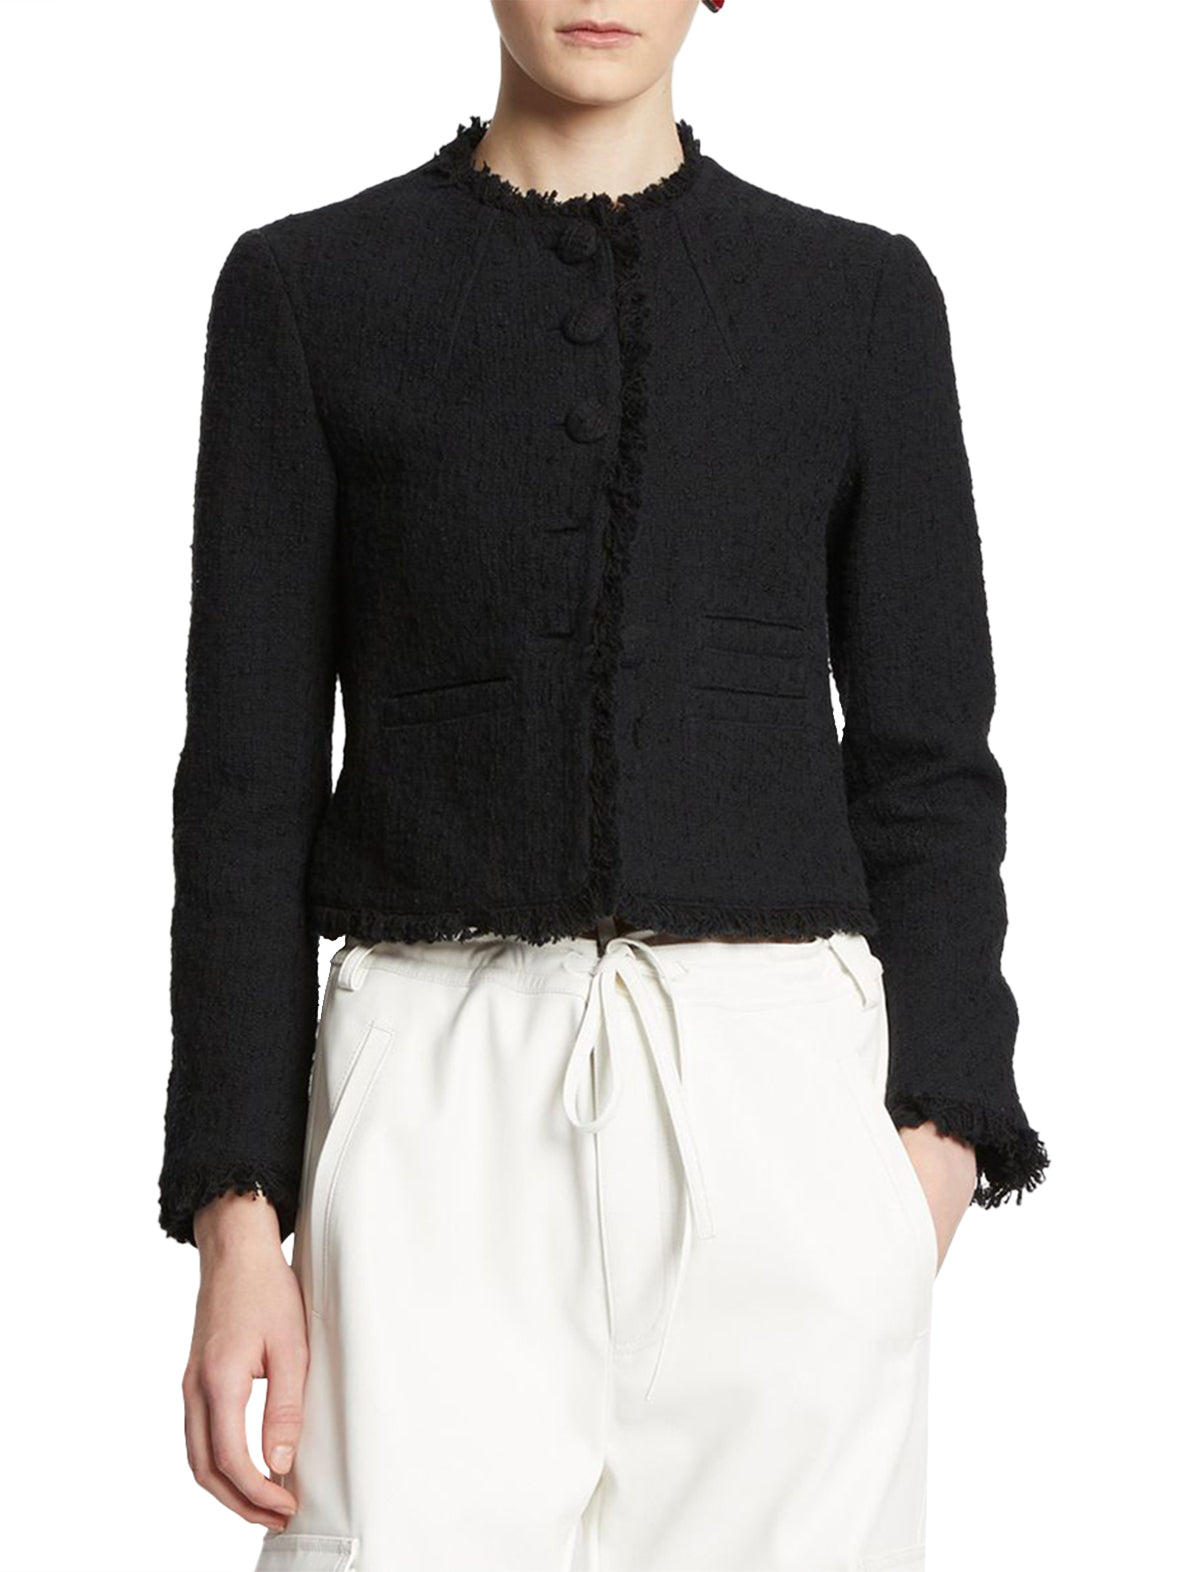 PROENZA SCHOULER WHITE LABEL Cropped Tweed Jacket in Black